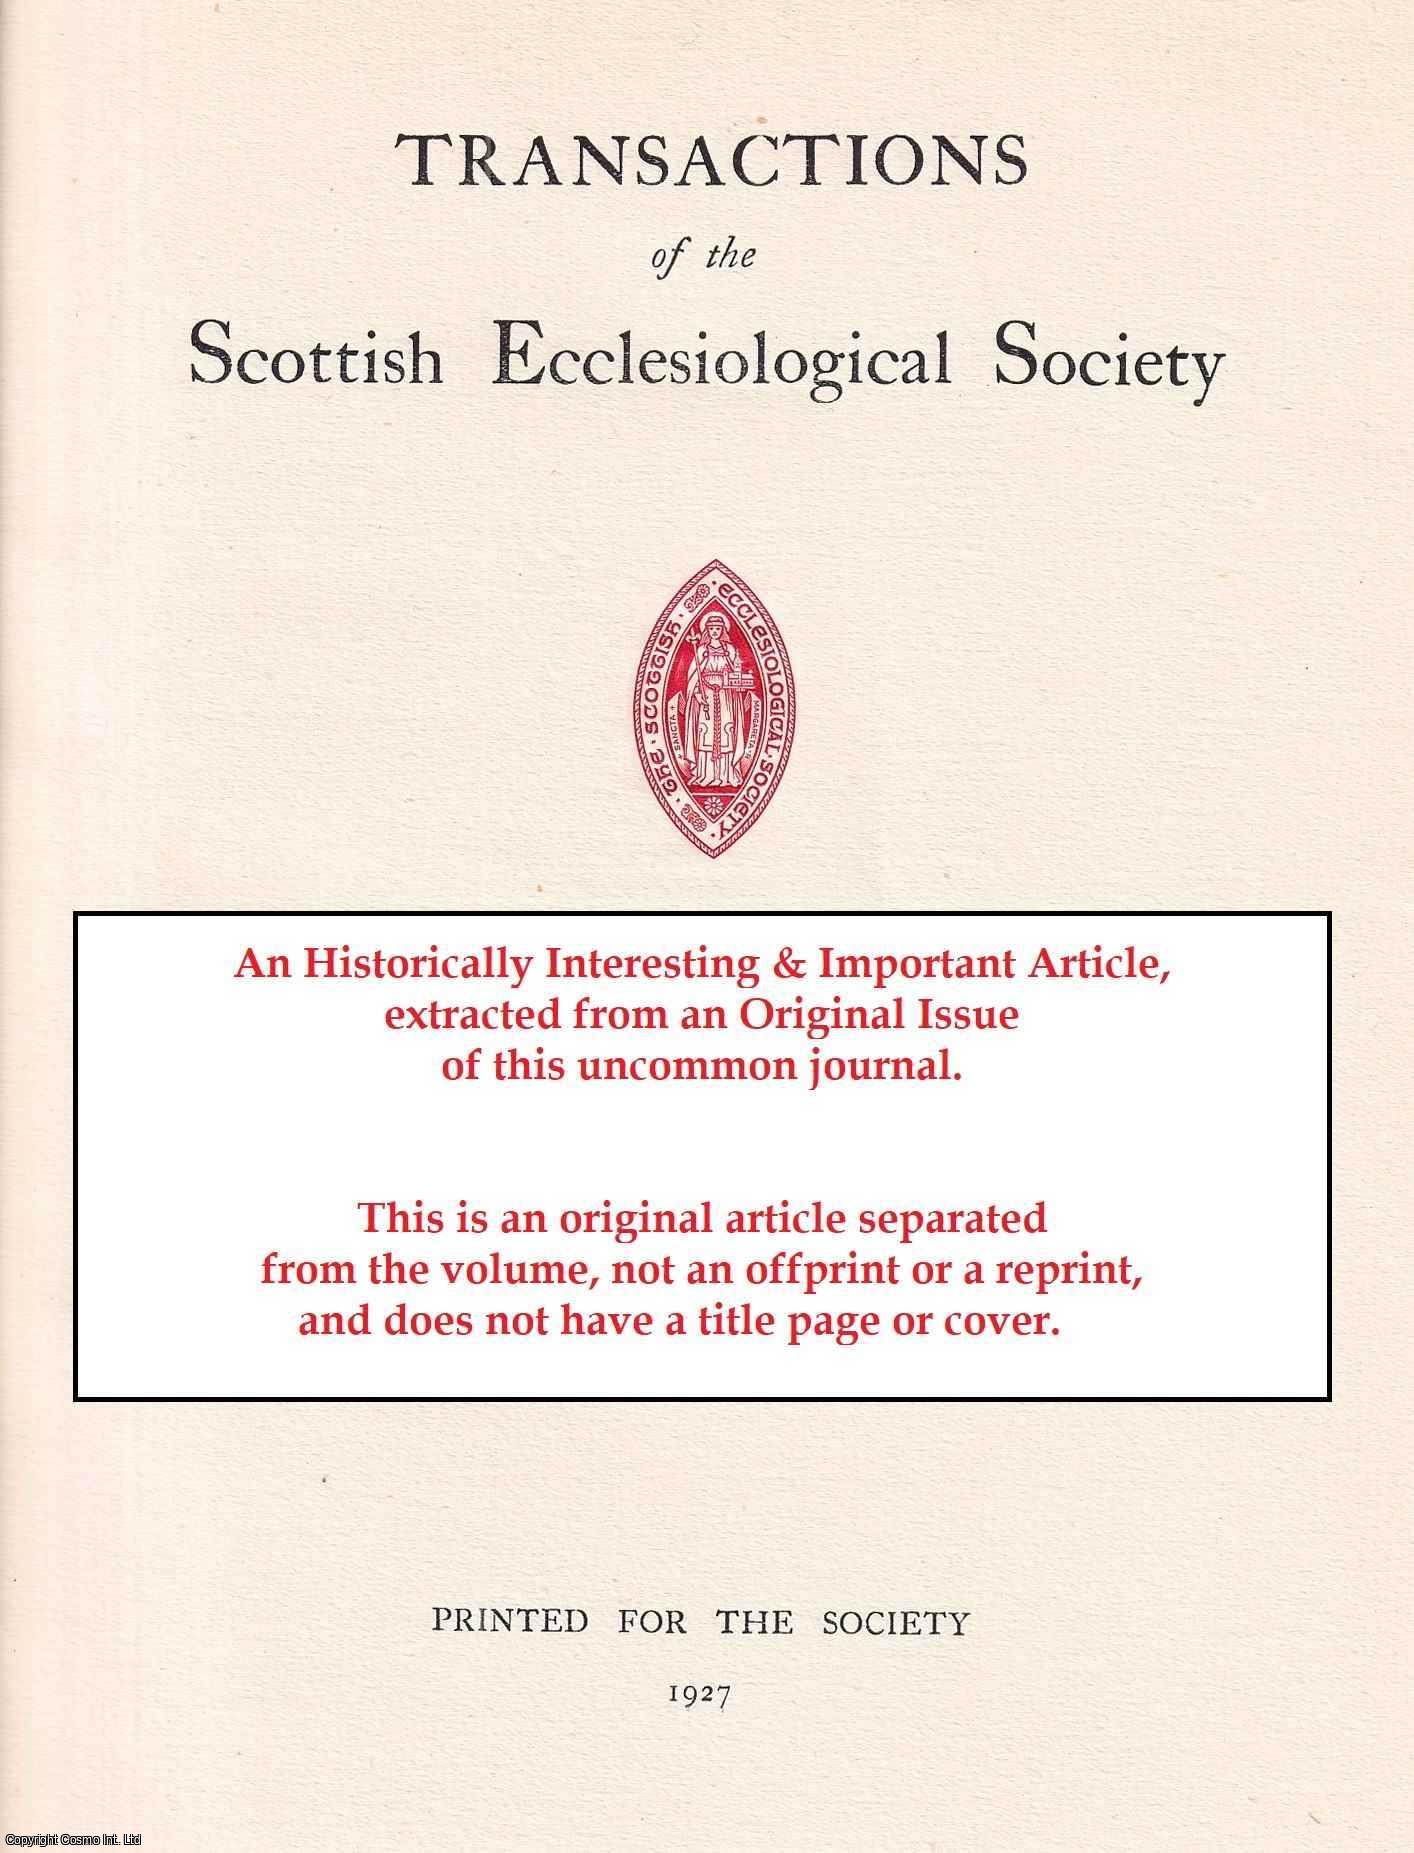 Herbert Honeyman - Greyfriars Church, Edinburgh. An original article from the Transactions of the Scottish Ecclesiological Society, 1913.